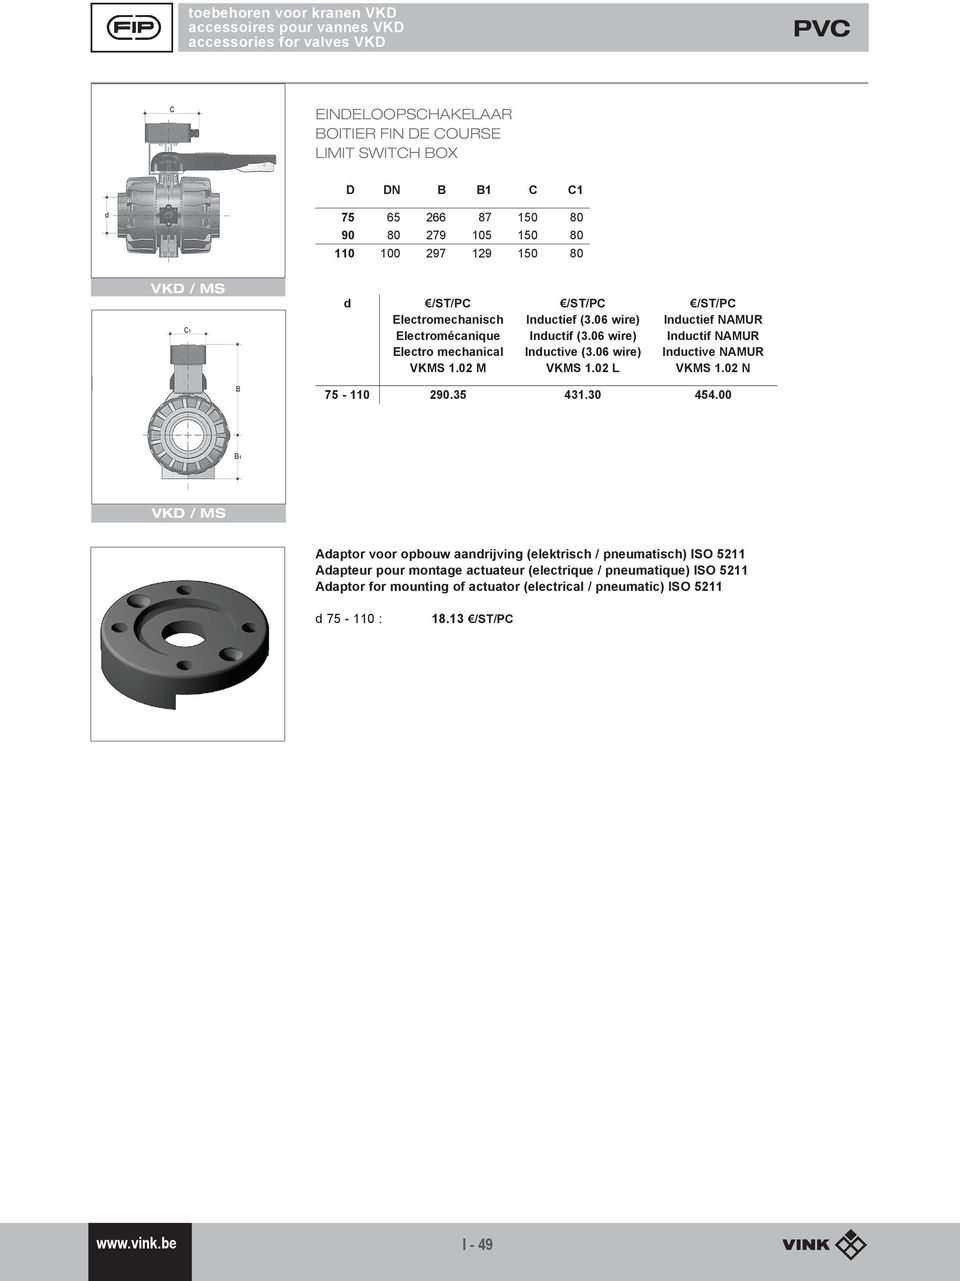 06 wire) VKMS 1.02 L /ST/PC Inductief NAMUR Inductif NAMUR Inductive NAMUR VKMS 1.02 N 75-110 290.35 431.30 454.